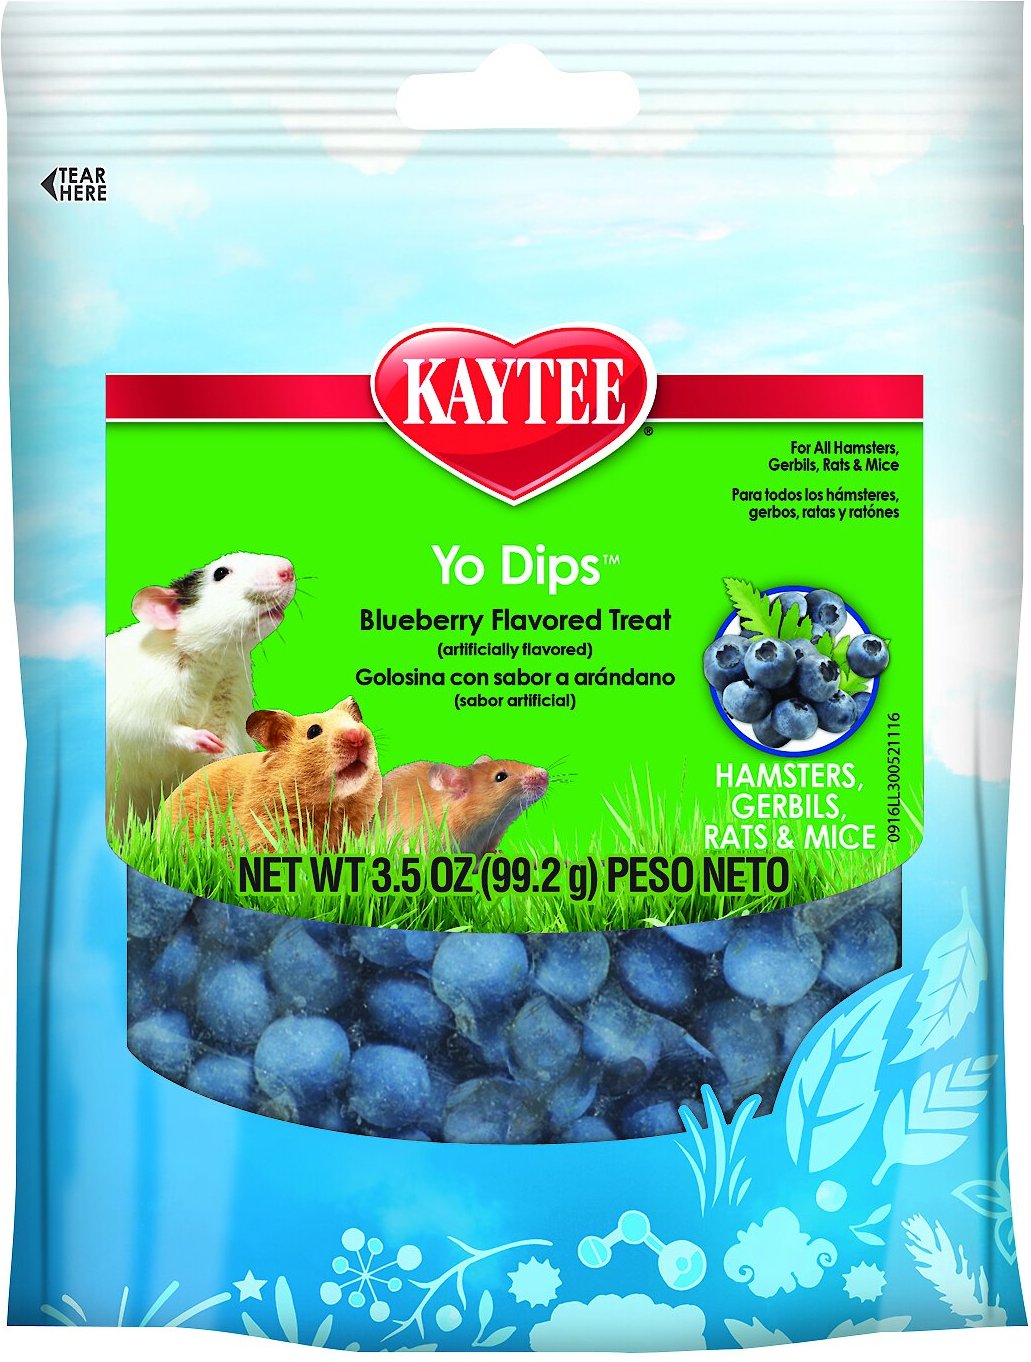 5. Kaytee Fiesta Blueberry Flavored Yogurt Dipped Treats